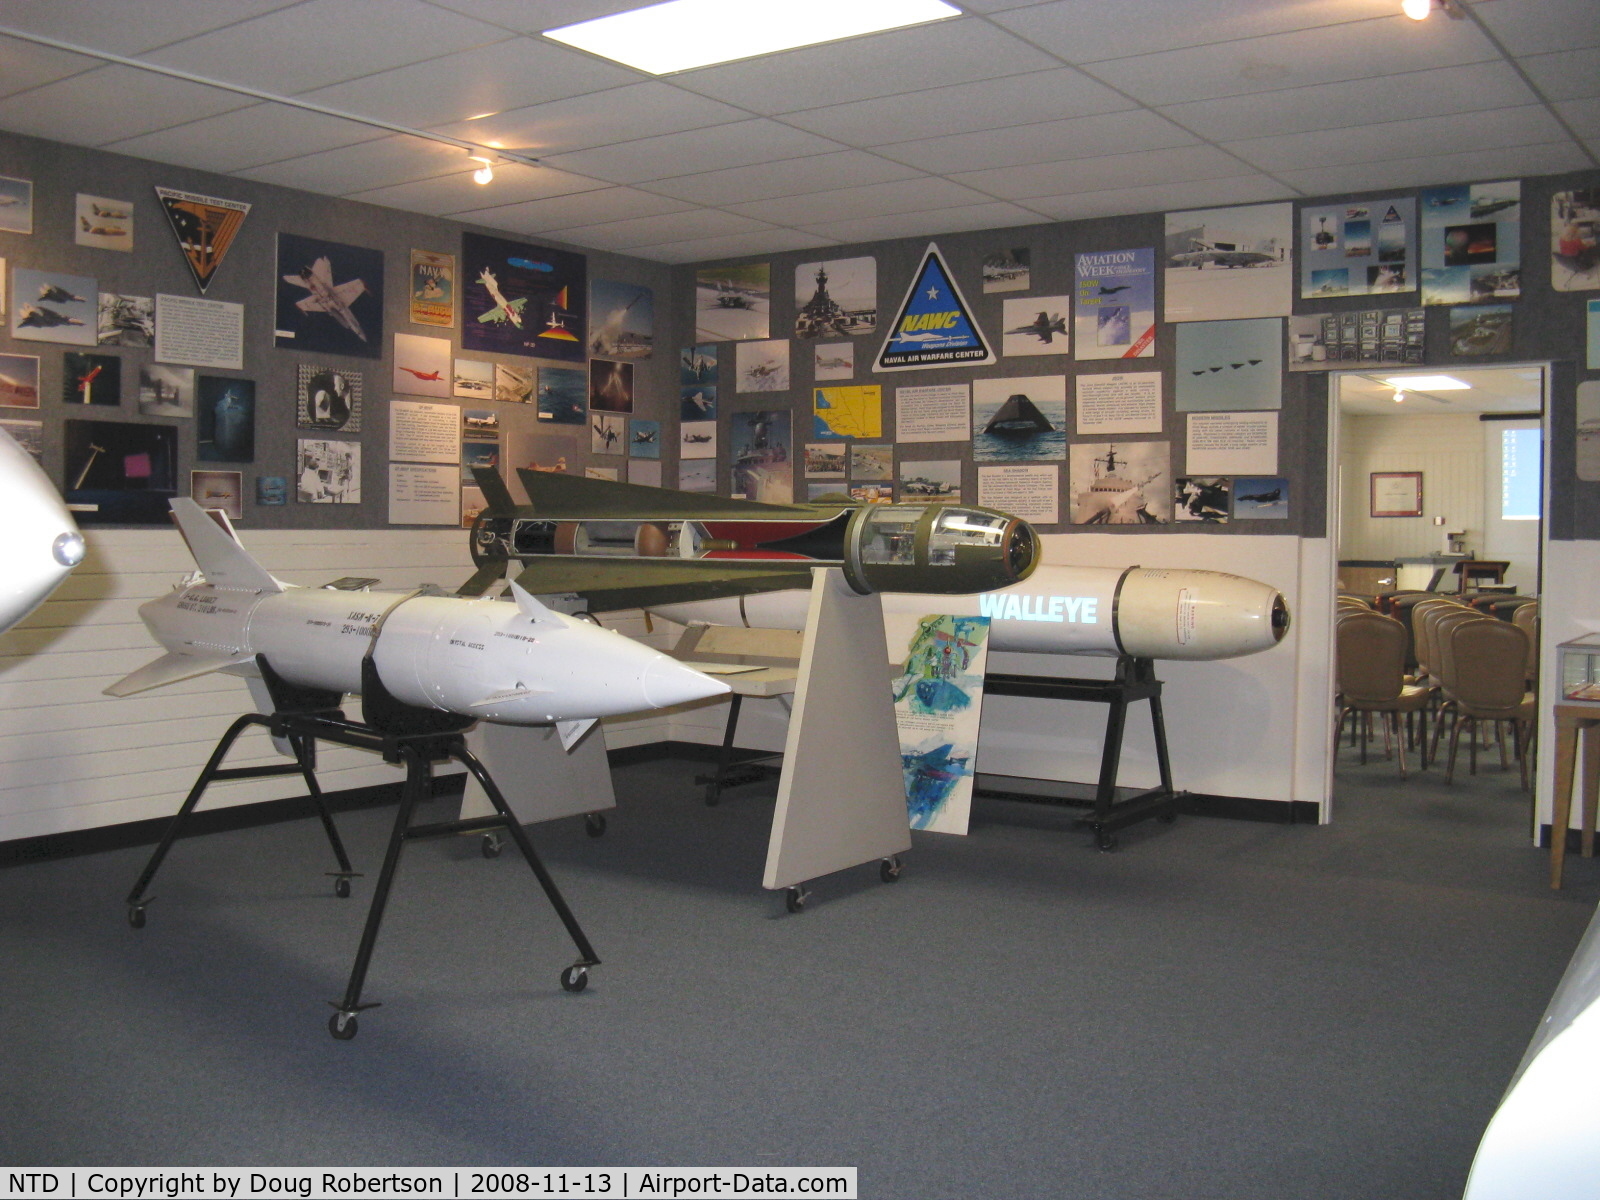 Point Mugu Nas (naval Base Ventura Co) Airport (NTD) - Command History Storage Facility, aka Point Mugu Missile Museum, Hellfire and Walleye missiles